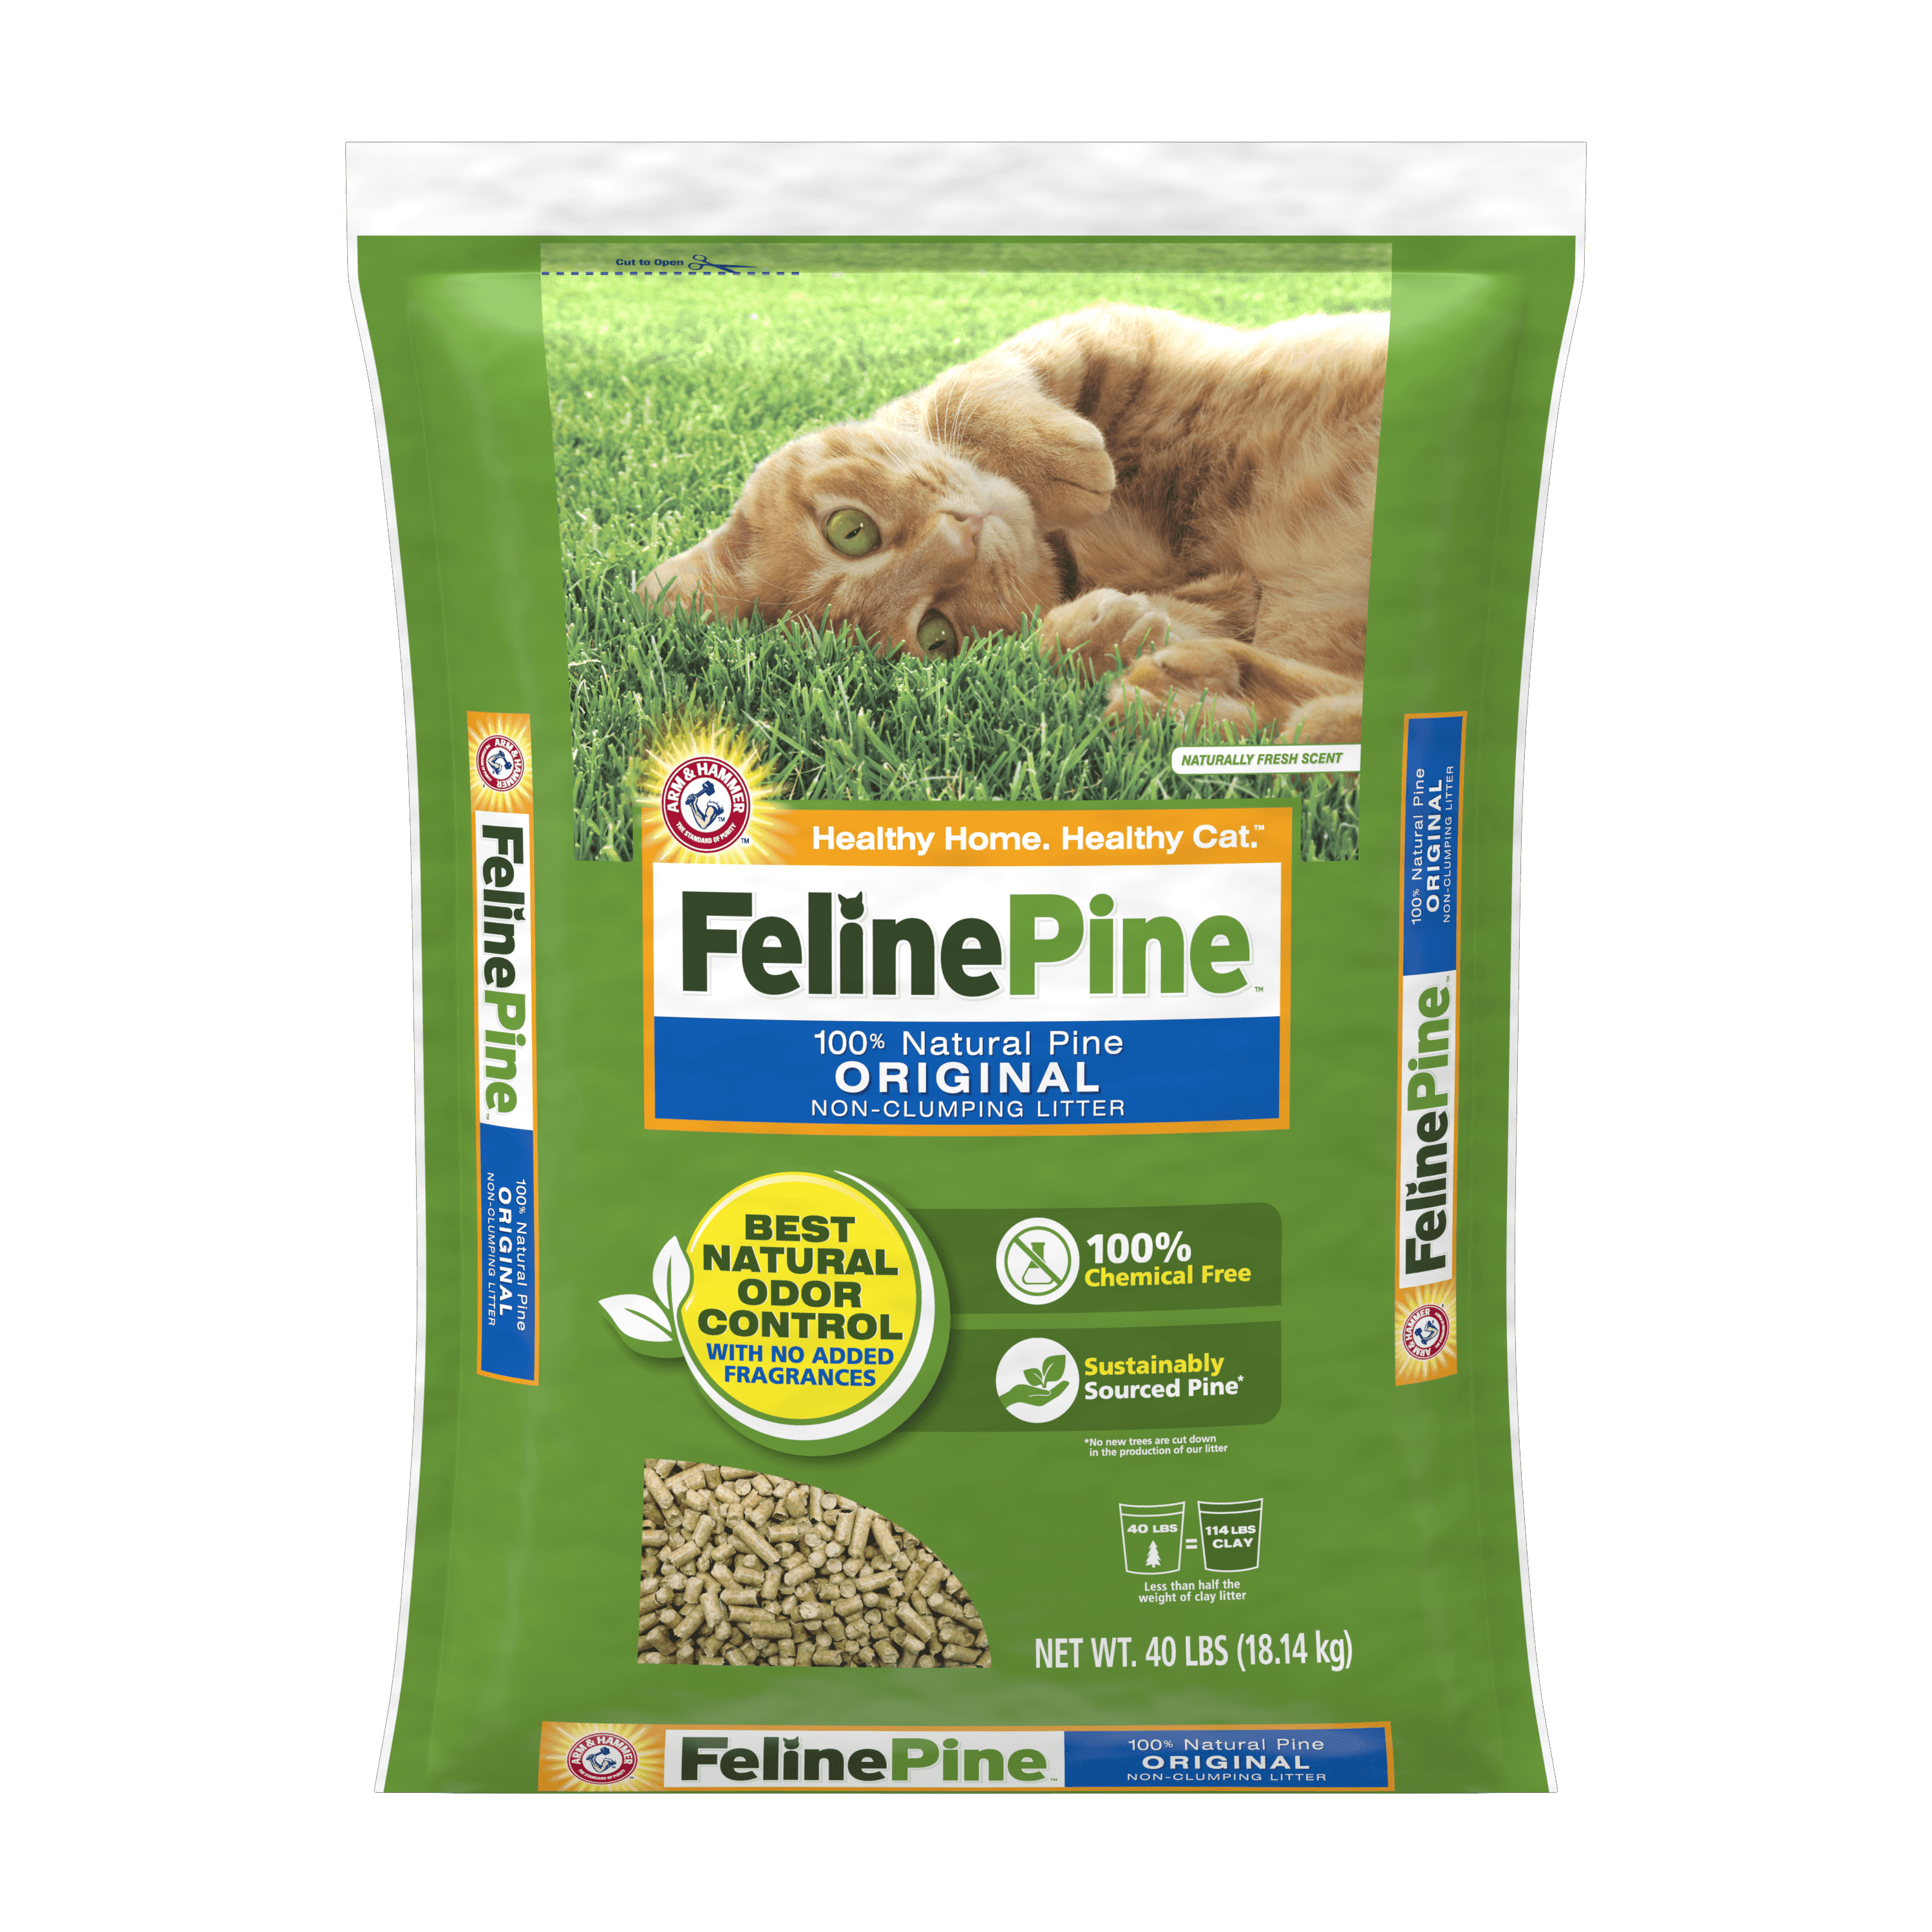 Feline Pine Original Cat Litter 40 lb